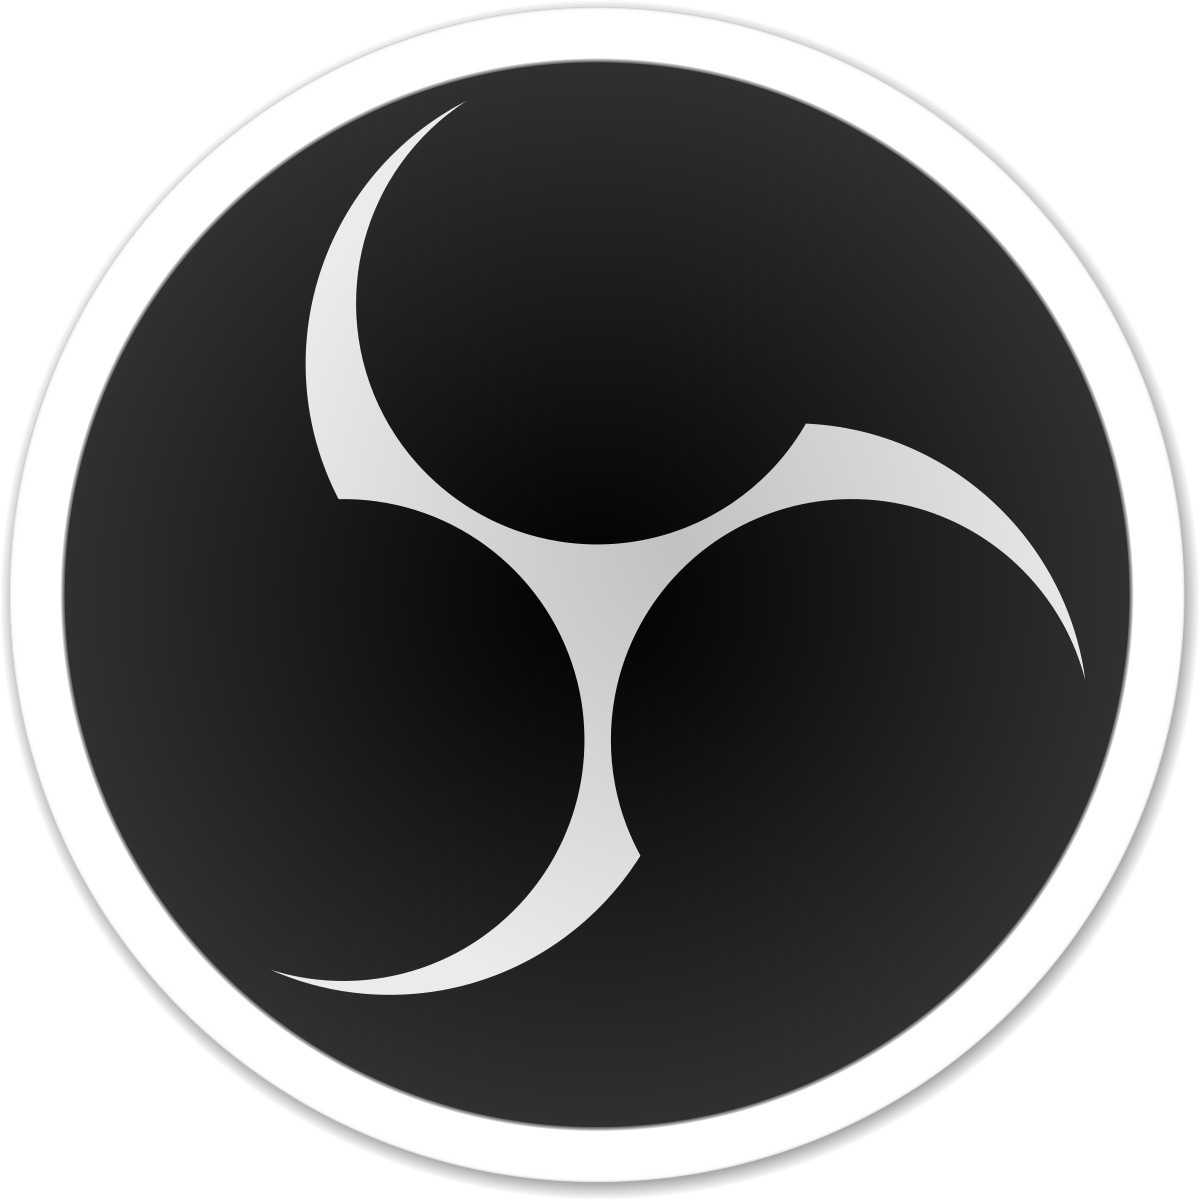 beaglebone ubuntu ffmpeg